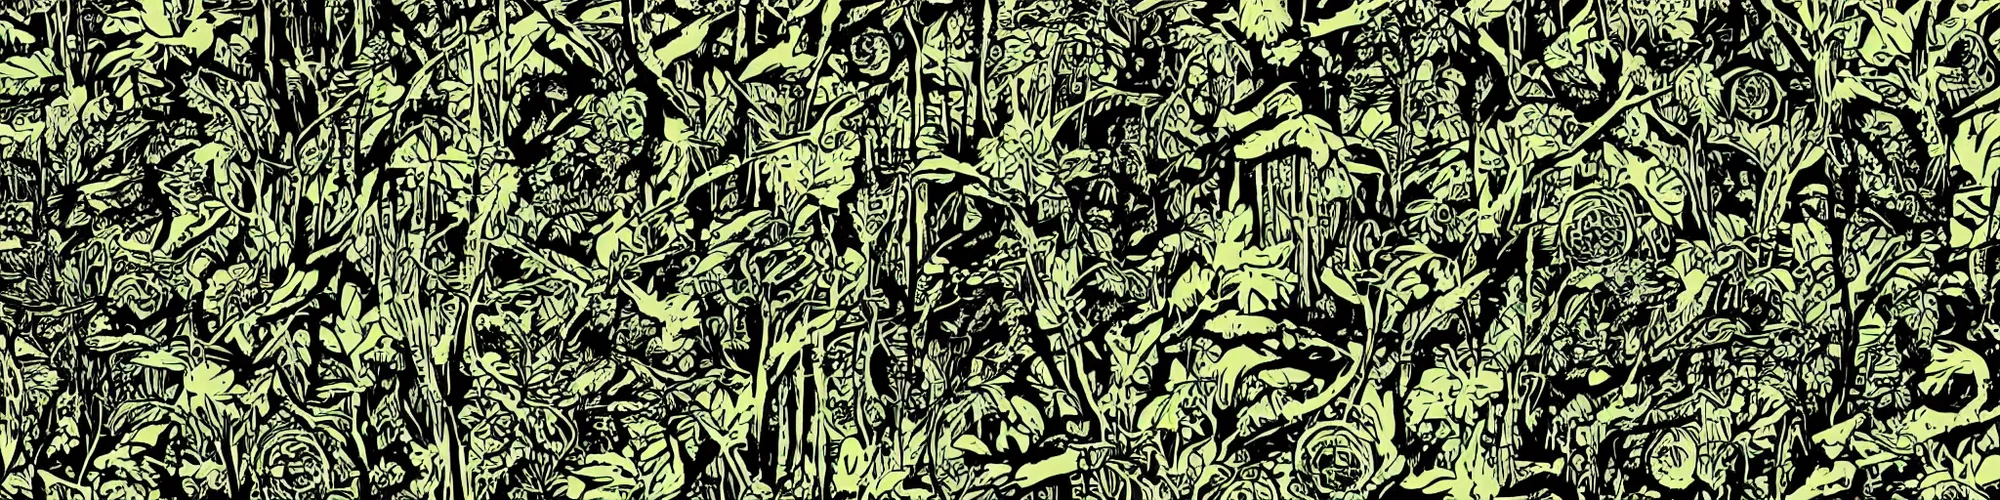 Prompt: a alien forest landscape by shepard fairey